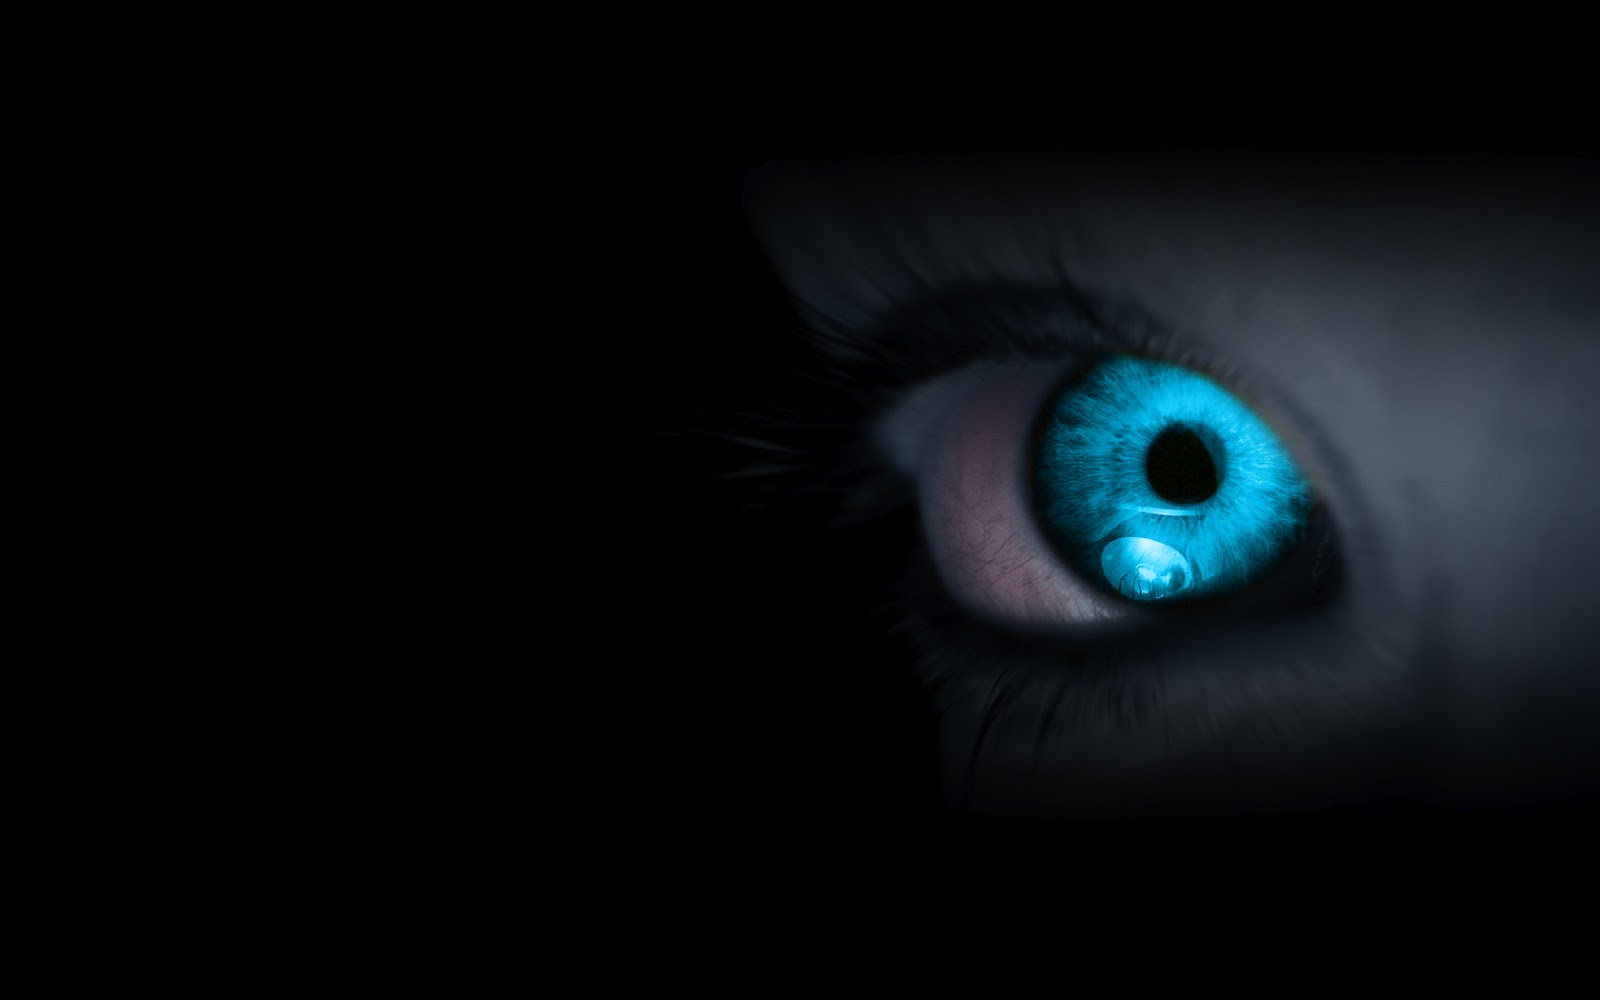 Black Face Blue Eye New Xp Wallpaper Windows7windows8 Xp7 Pc Them